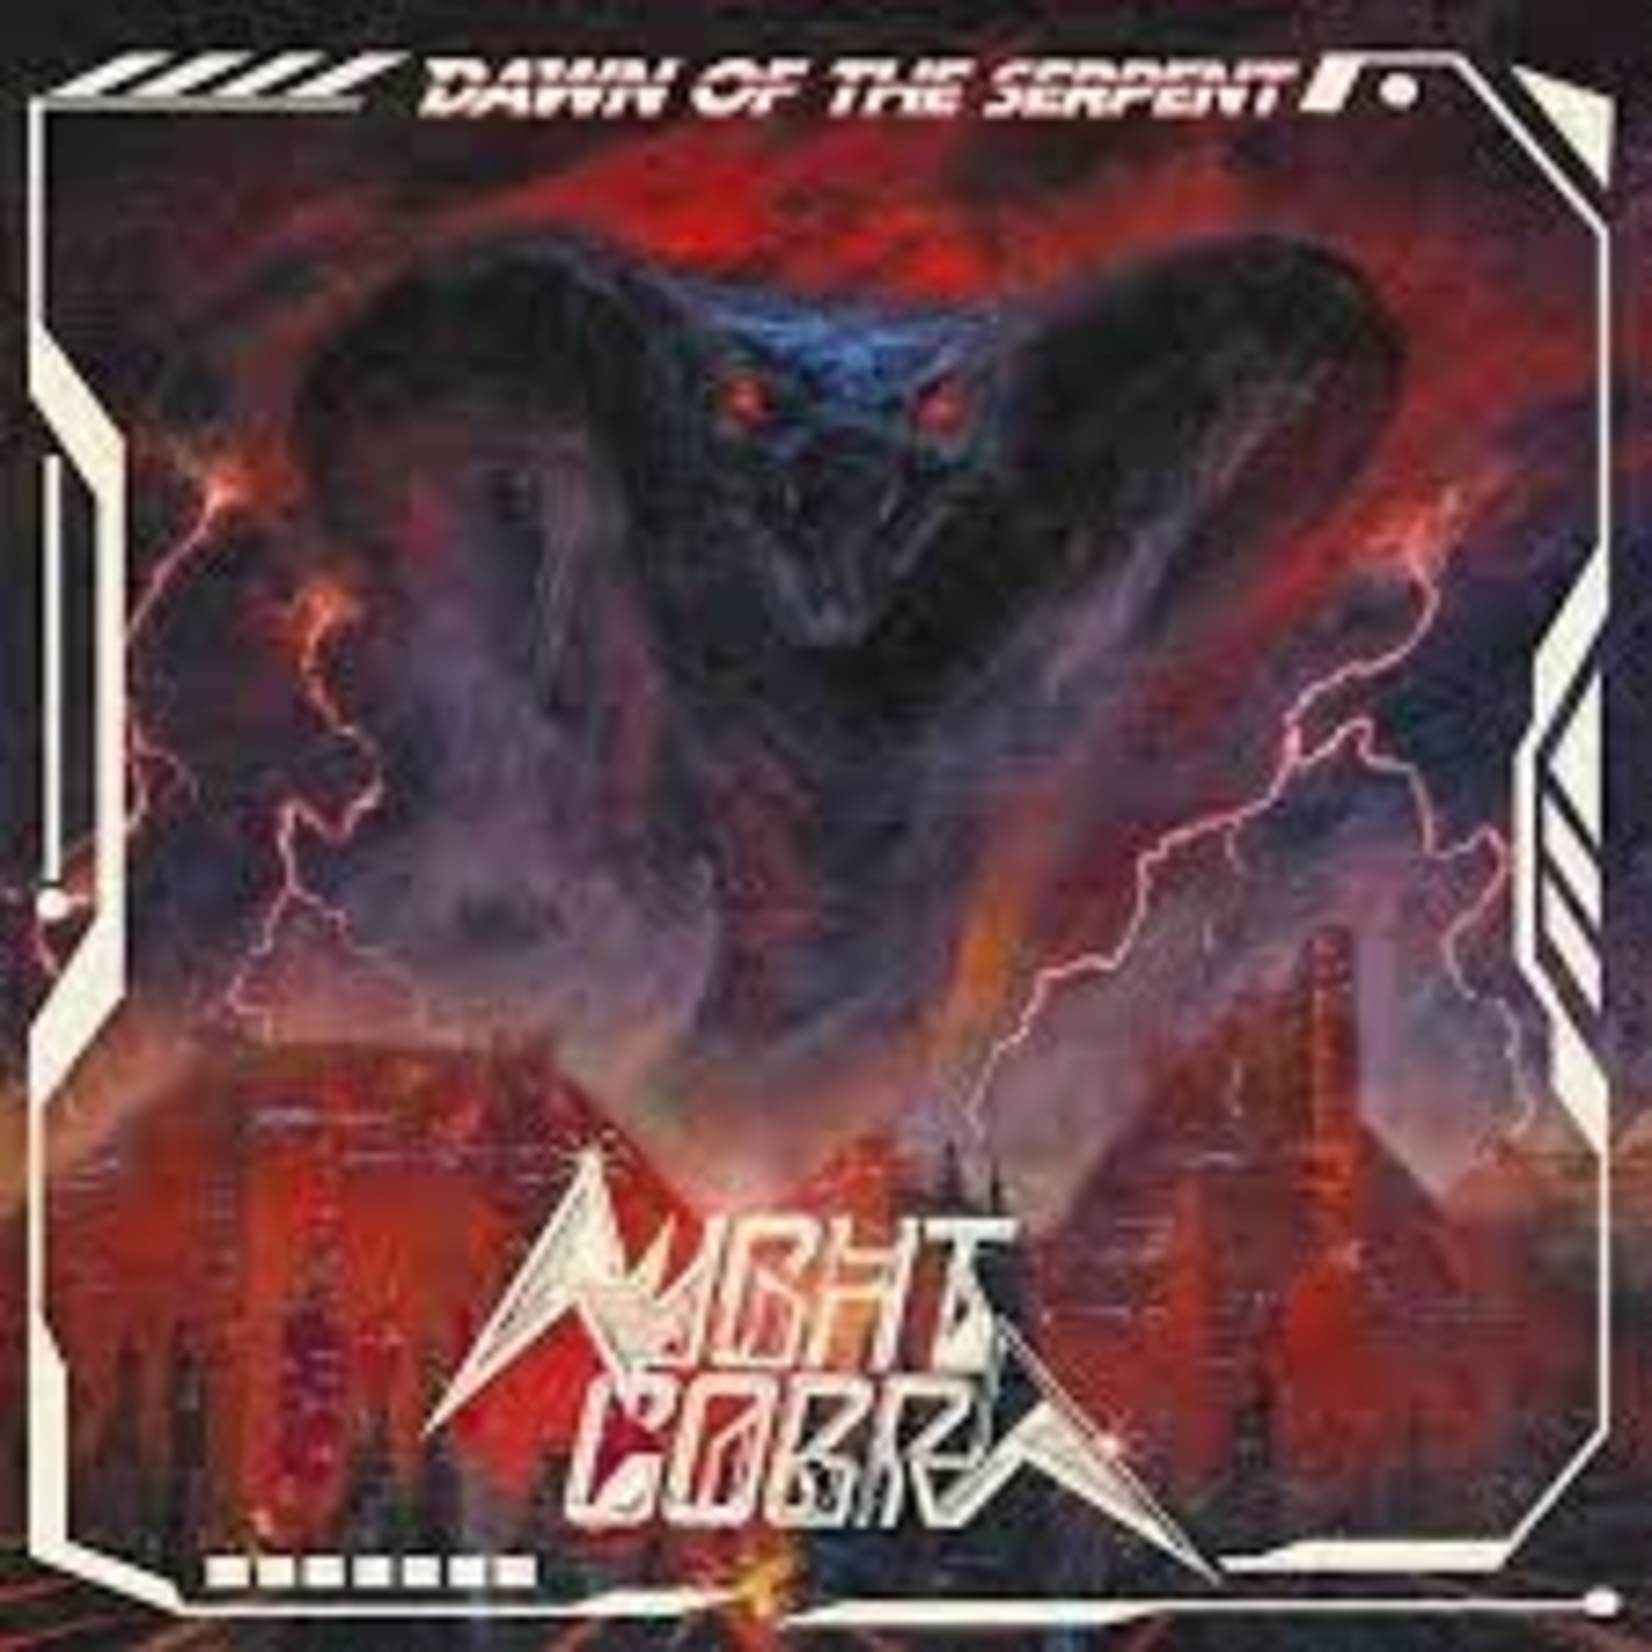 NIGHT COBRA - dawn of the serpent LP (purple)